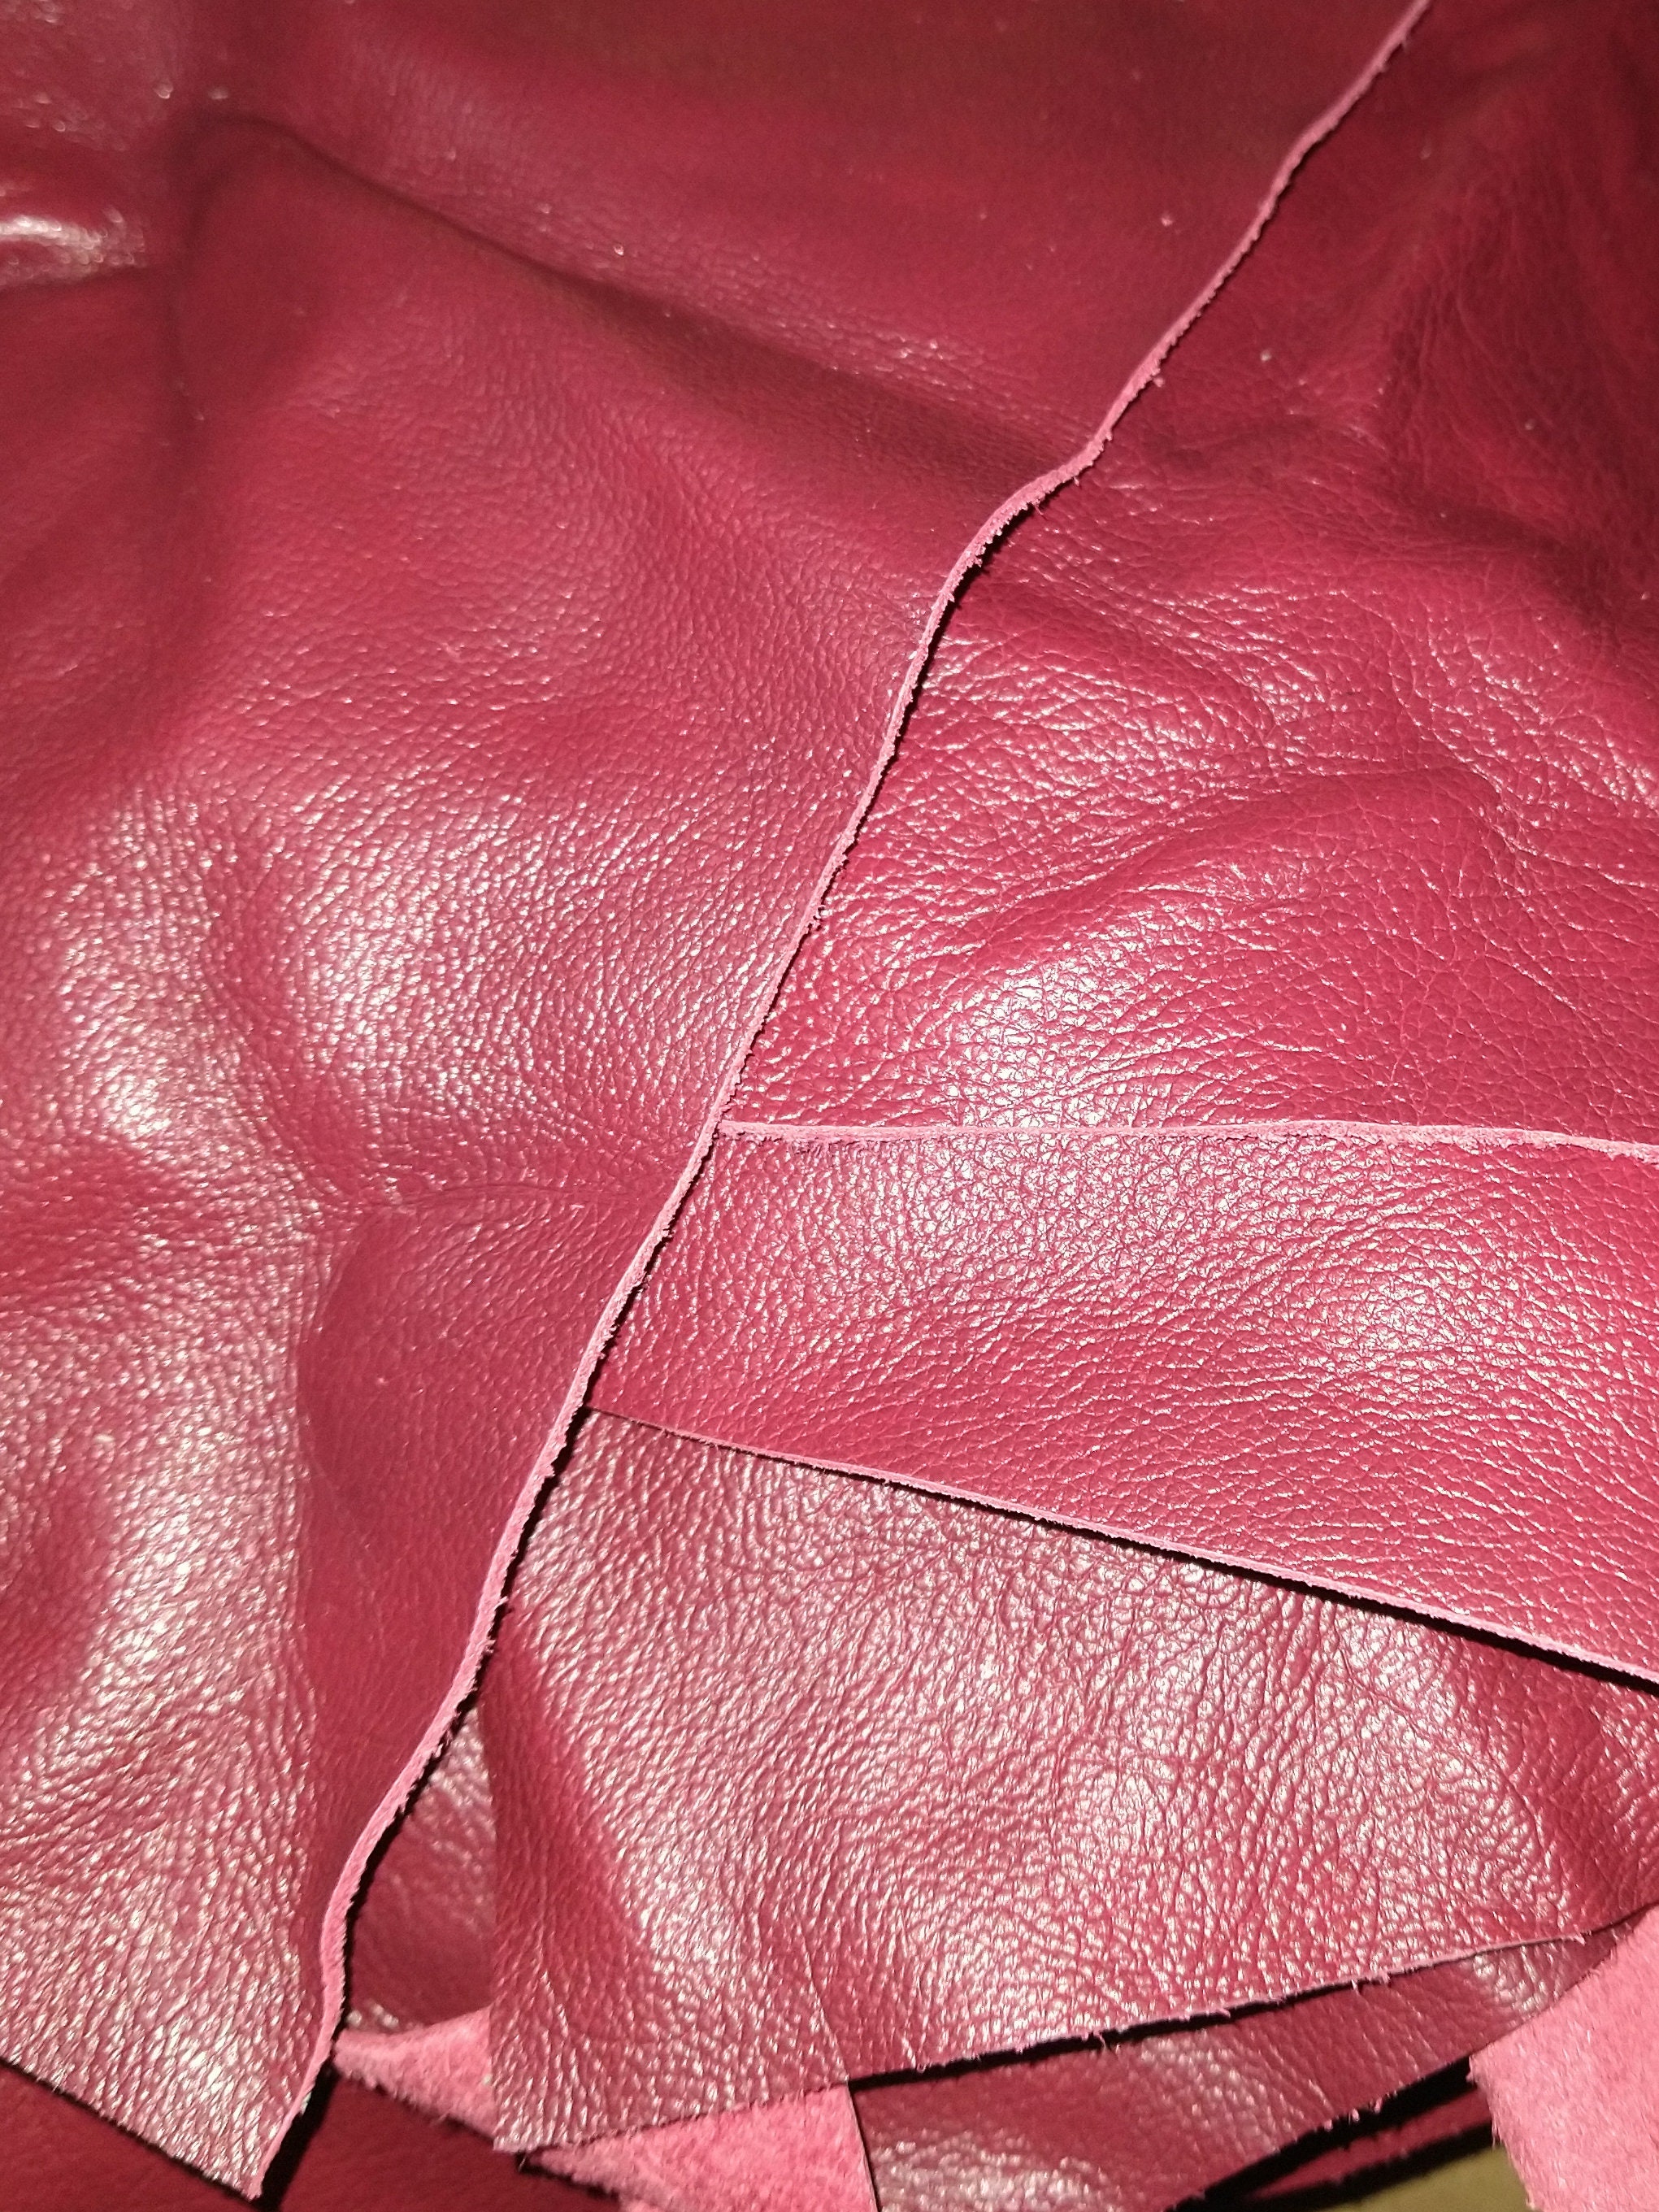 Scrap chrometan leather 1lb packs